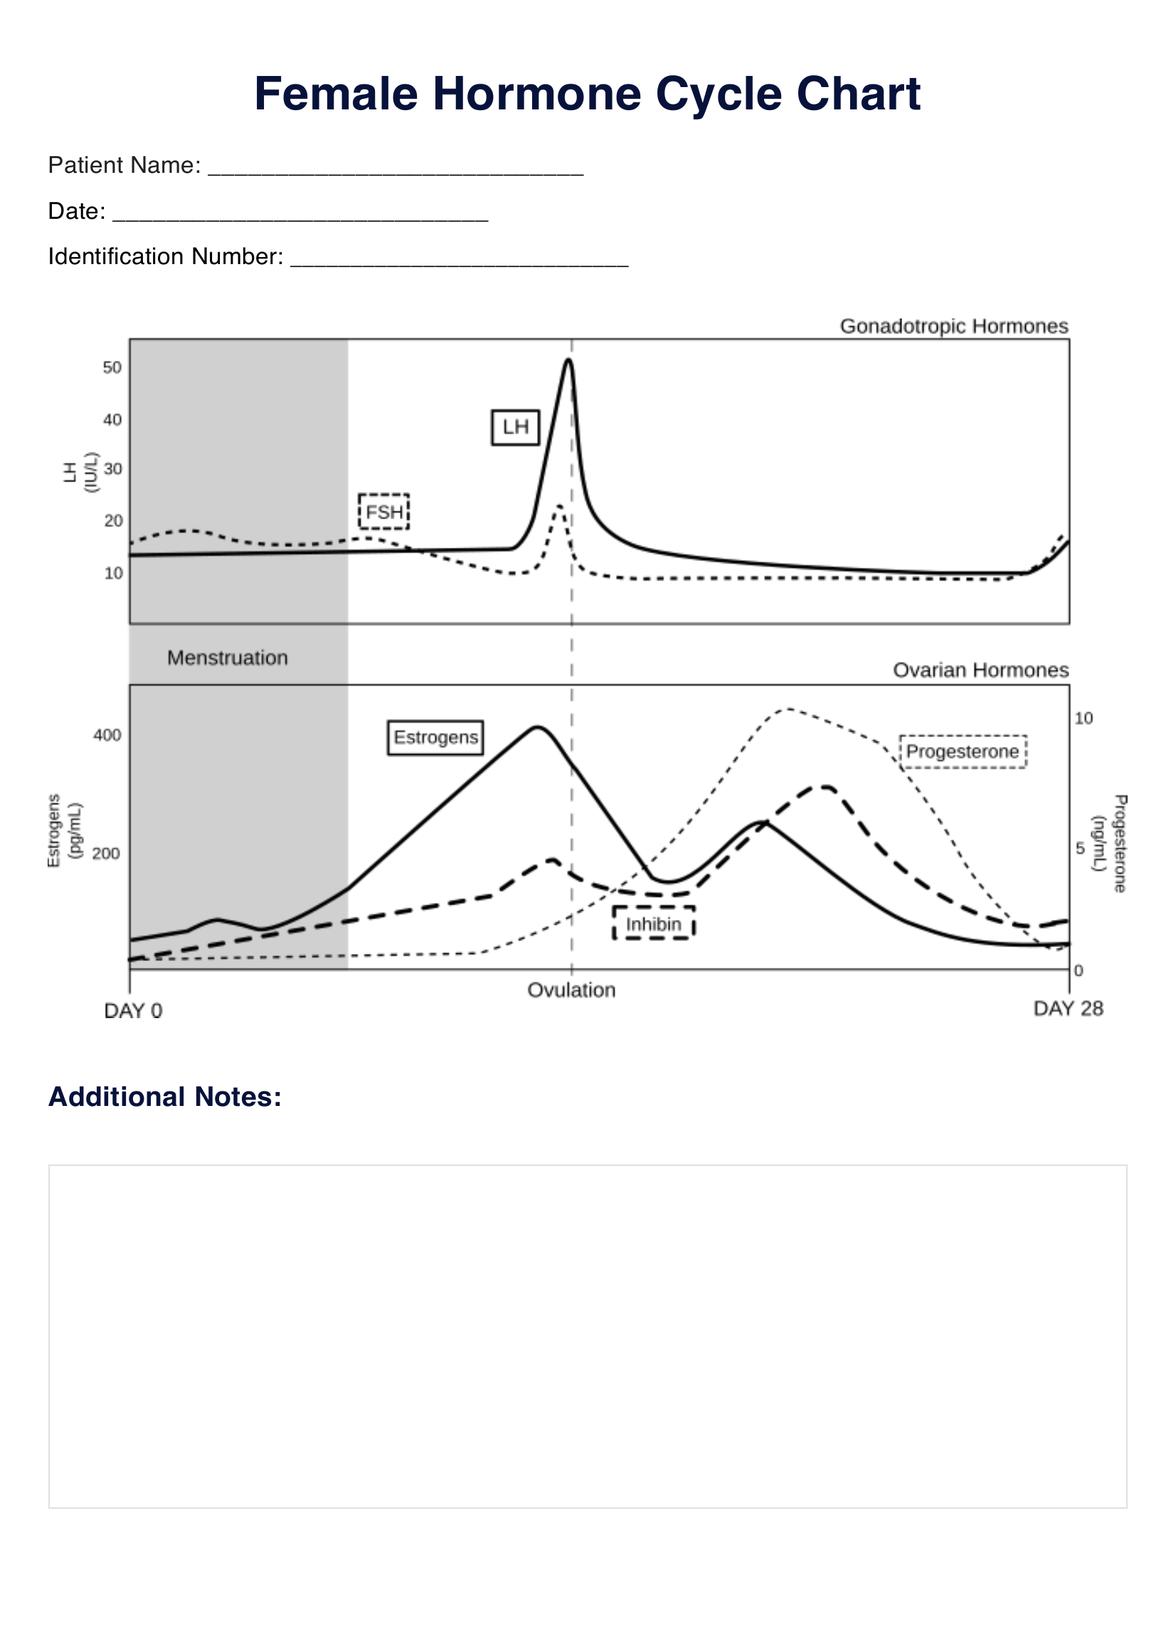 Female Hormone Cycle PDF Example